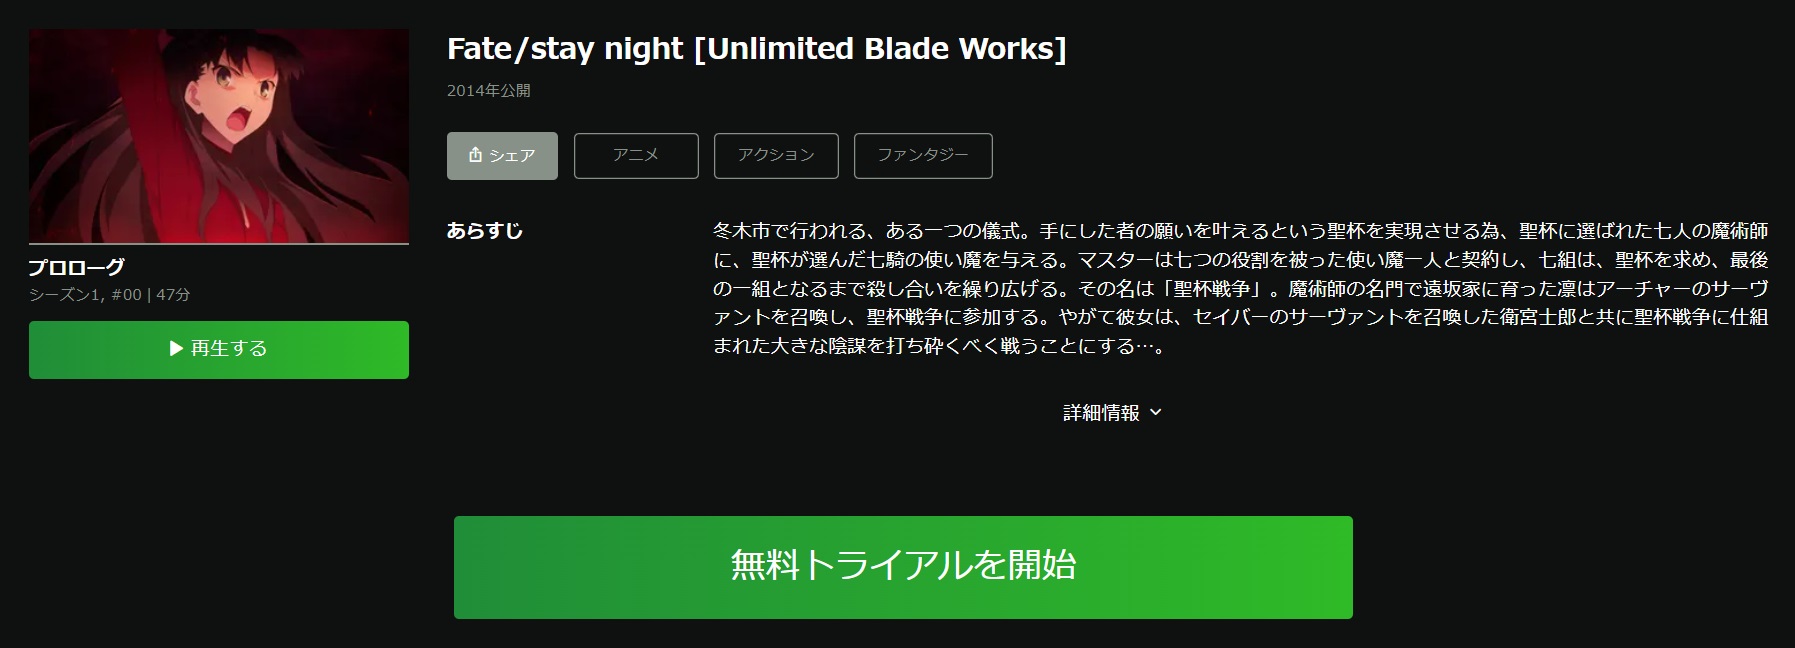 Fate/stay night UBW